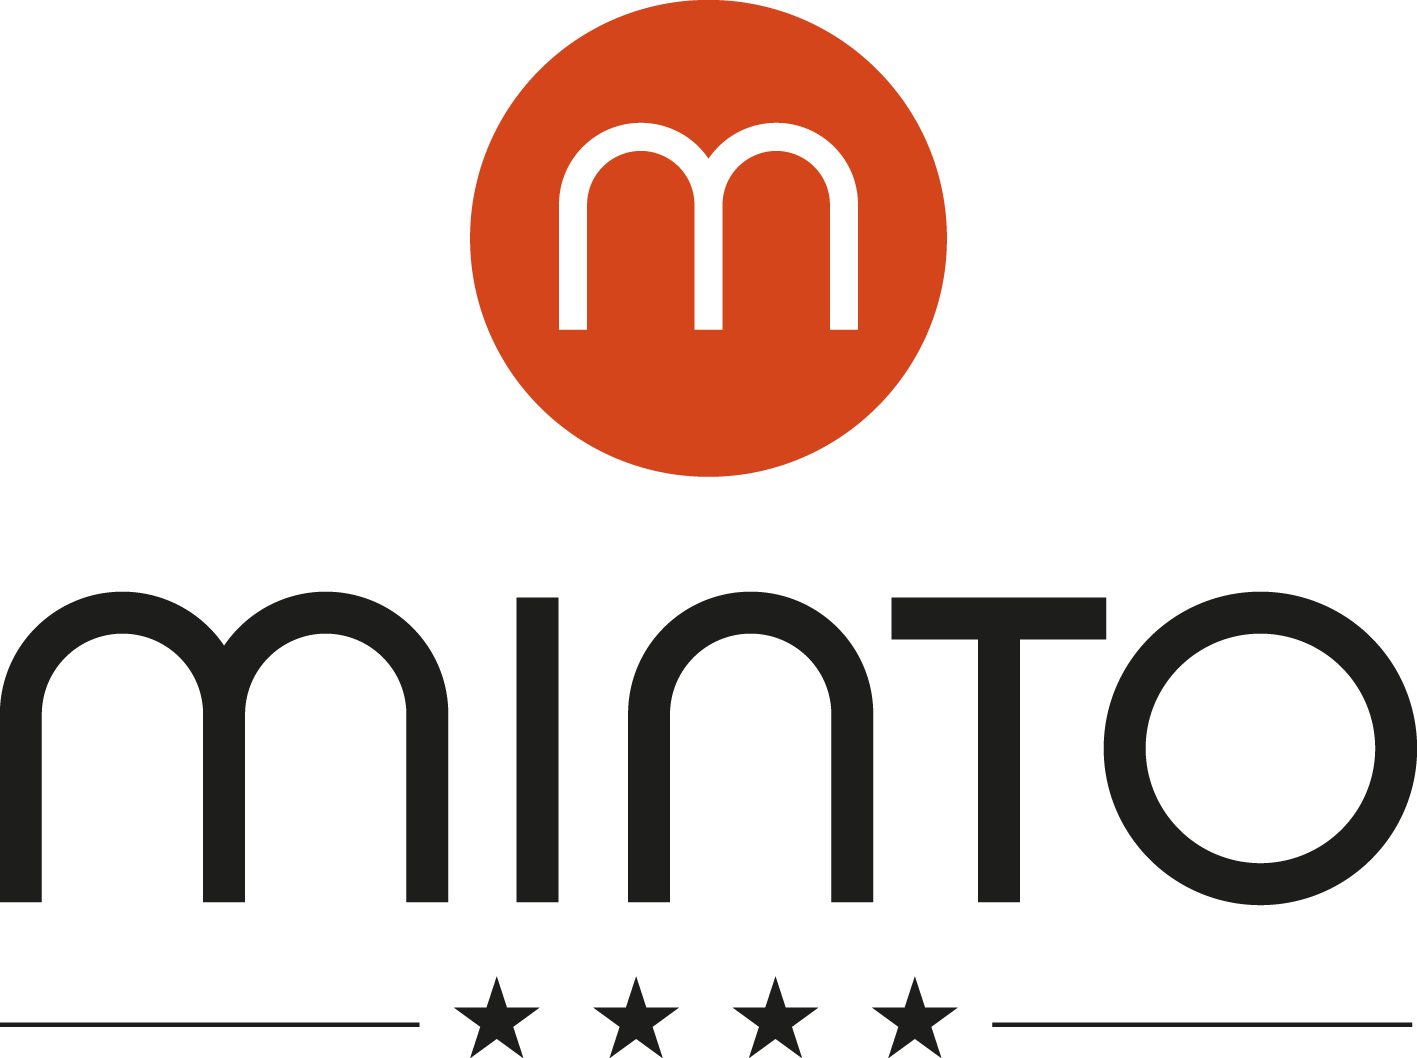 Minto Logo